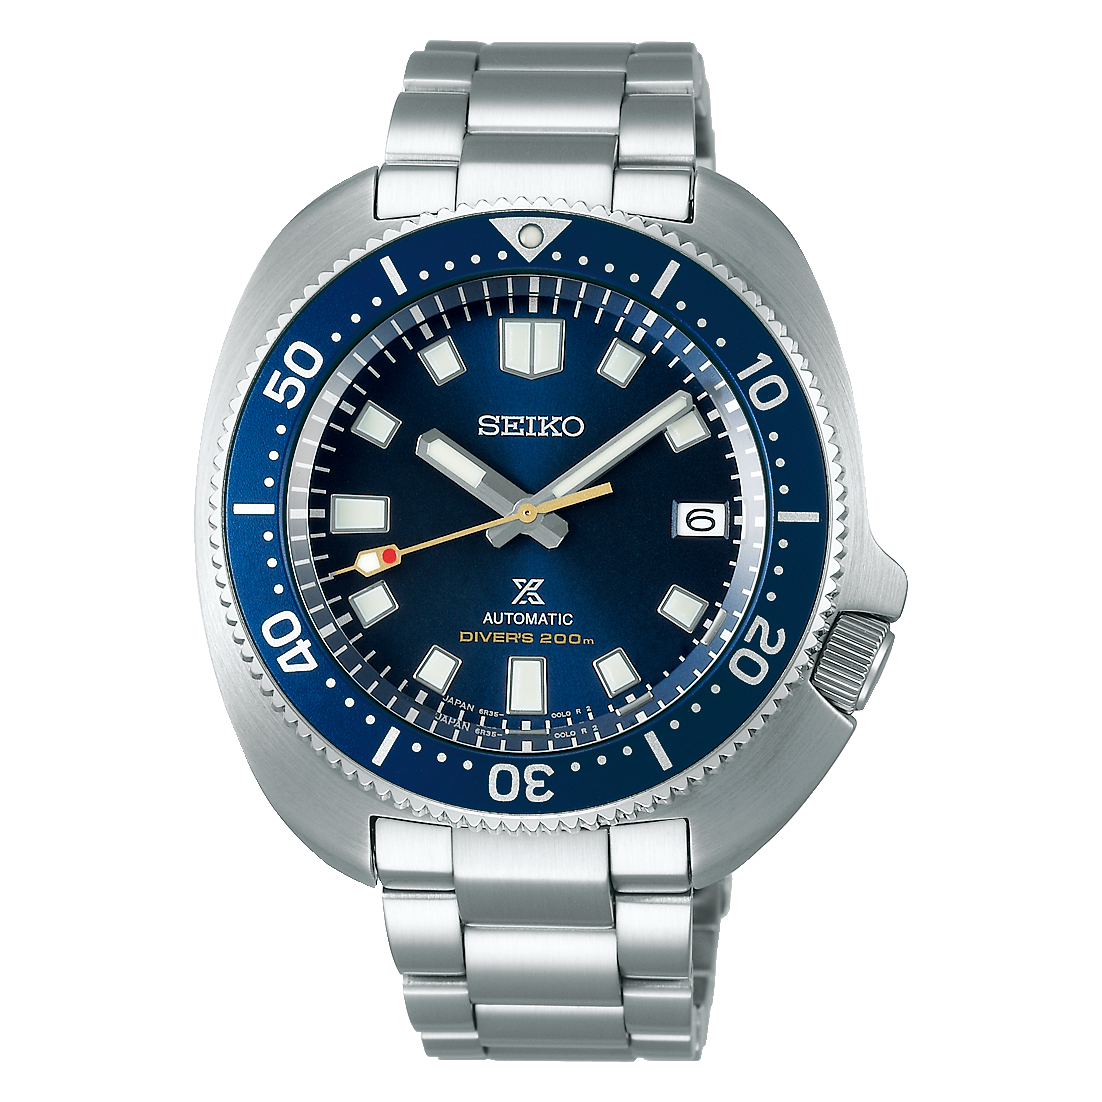 SEIKO Prospex Limited Edition Automatic Divers Watch SPB183J1 Seiko